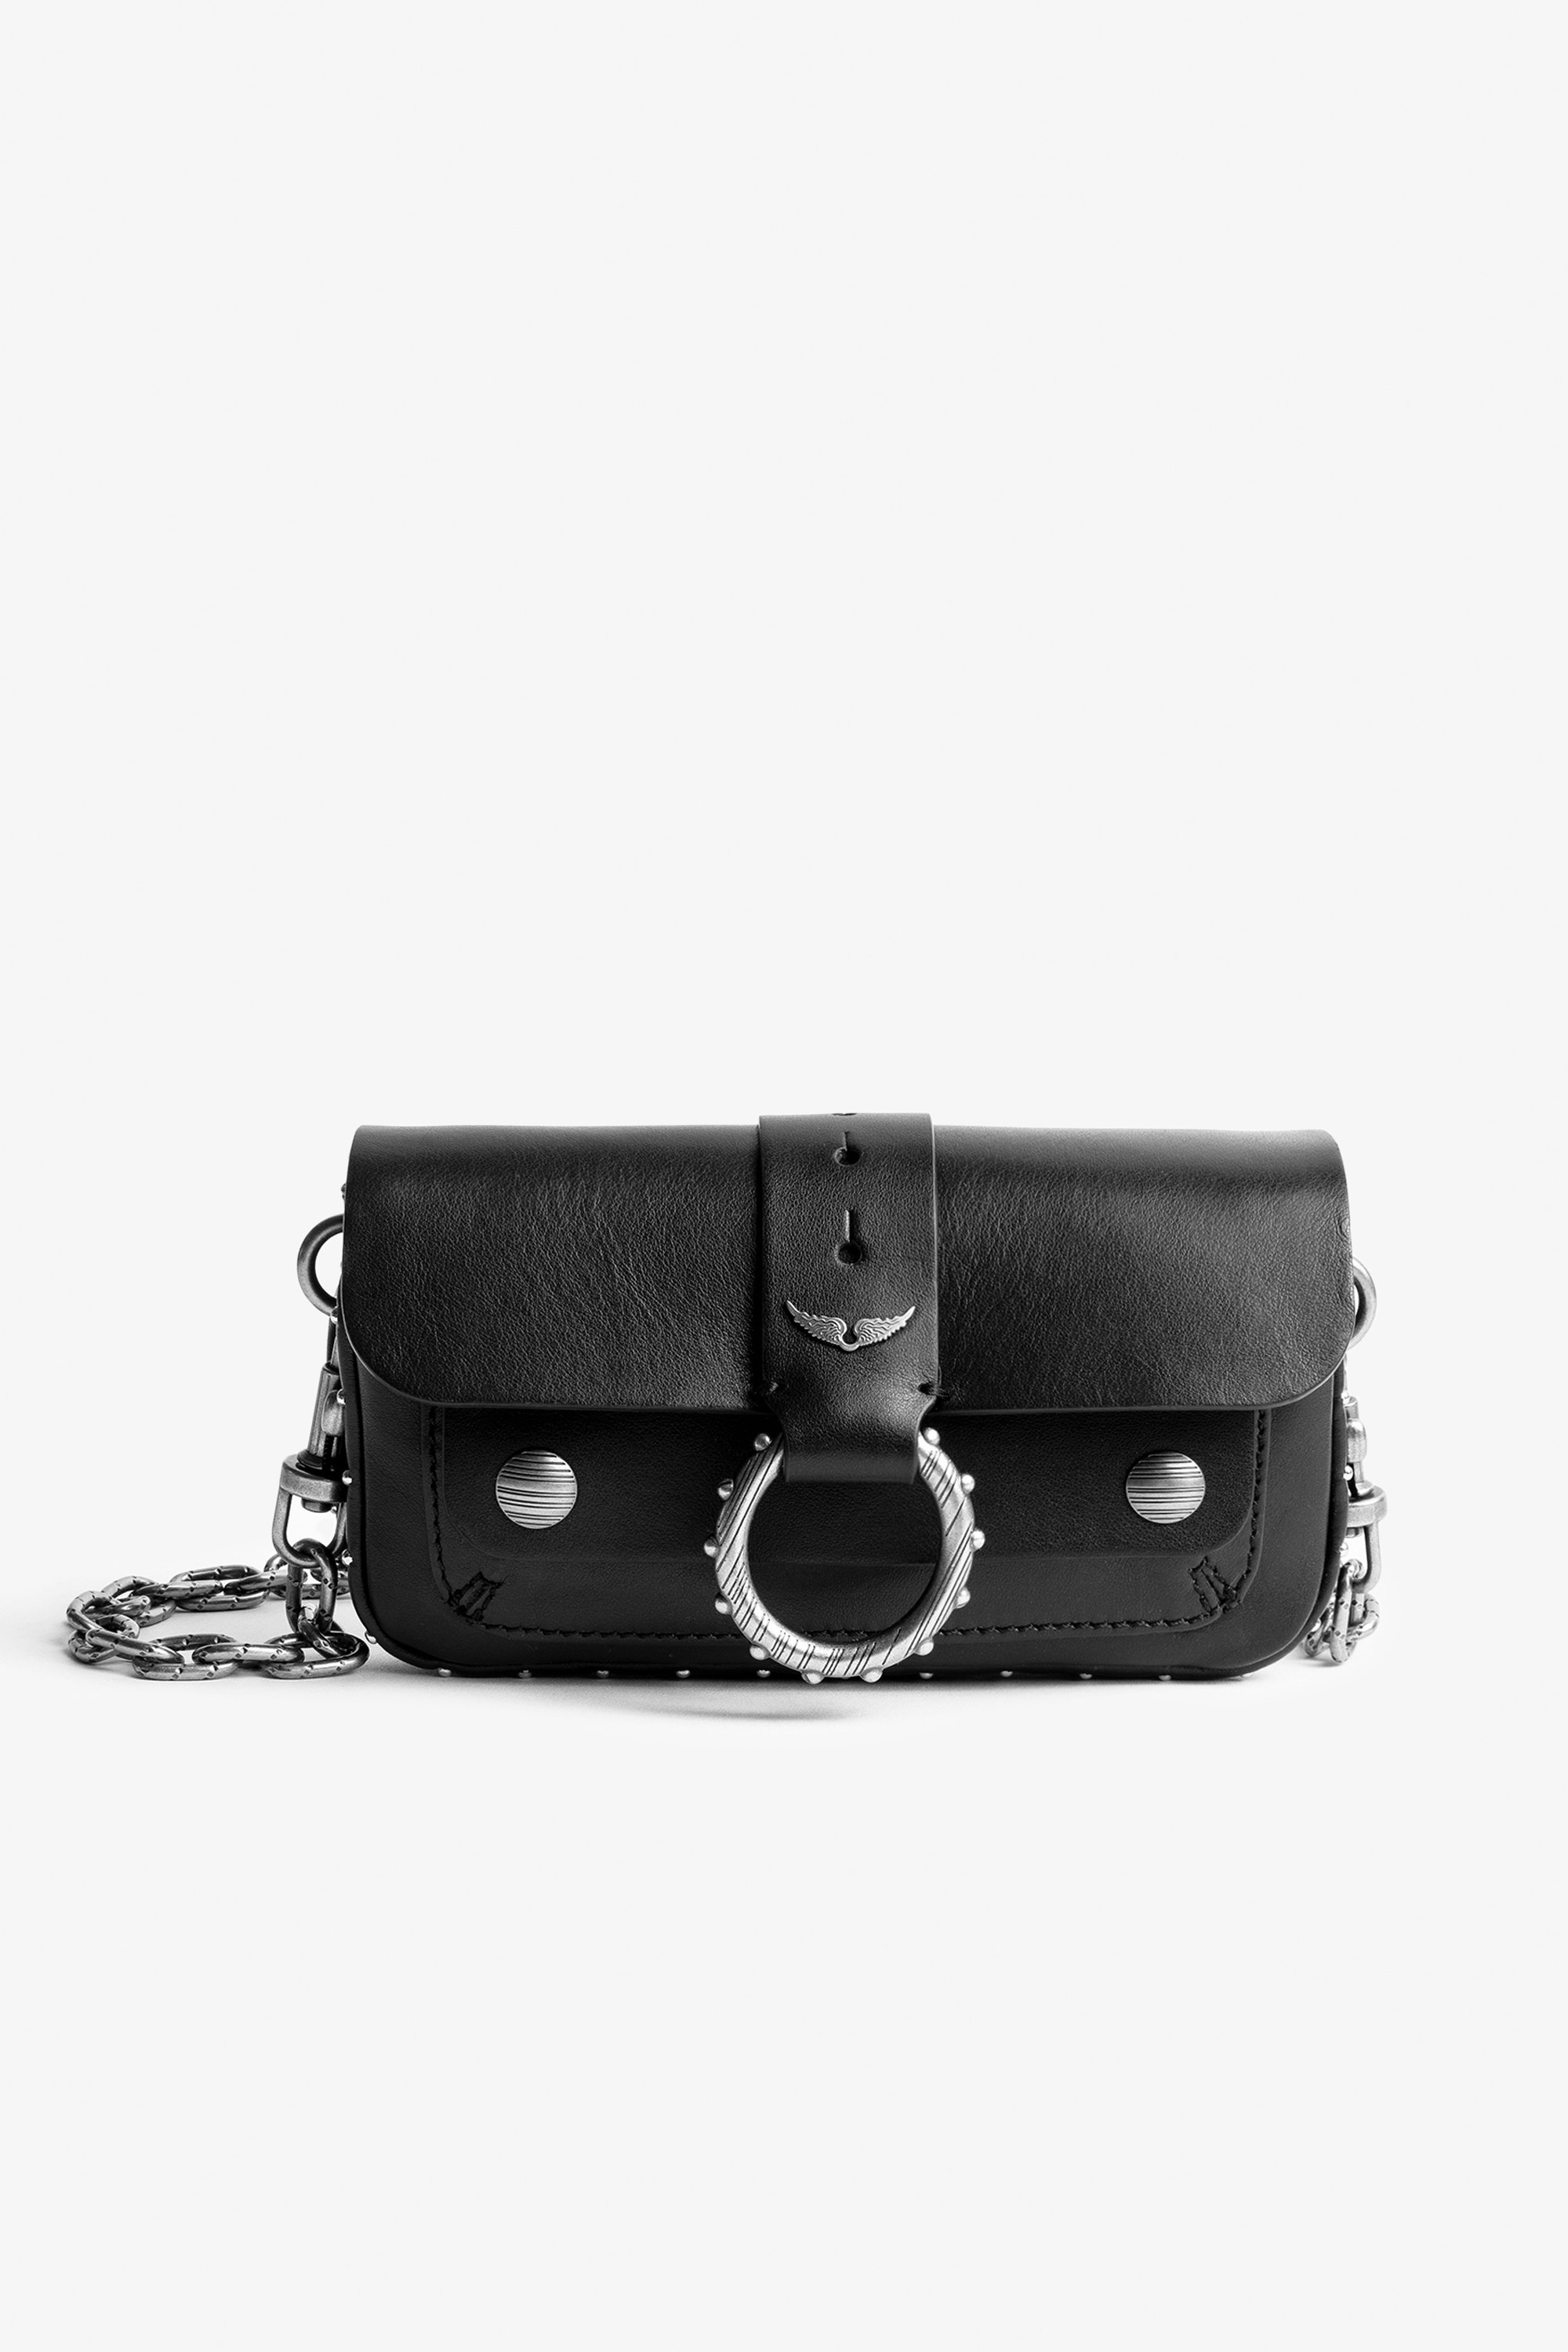 Bolso Kate Wallet Emblemático bolso Kate Wallet negro de cuero liso para mujer.